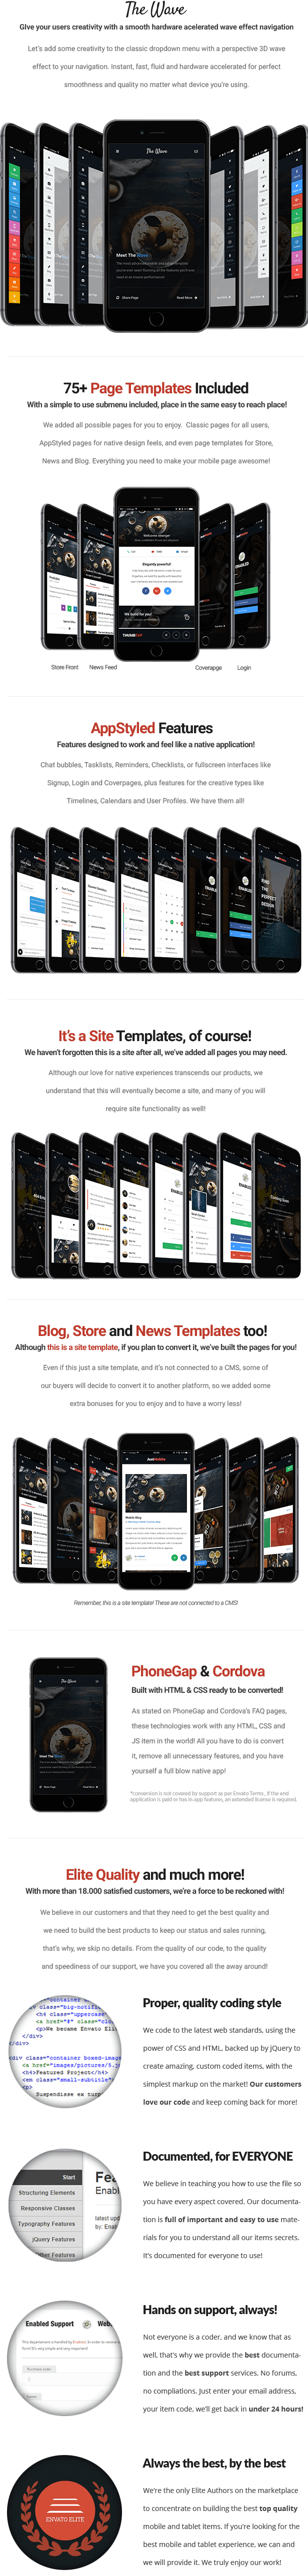 The Wave Mobile | PhoneGap & Cordova Mobile App - 10